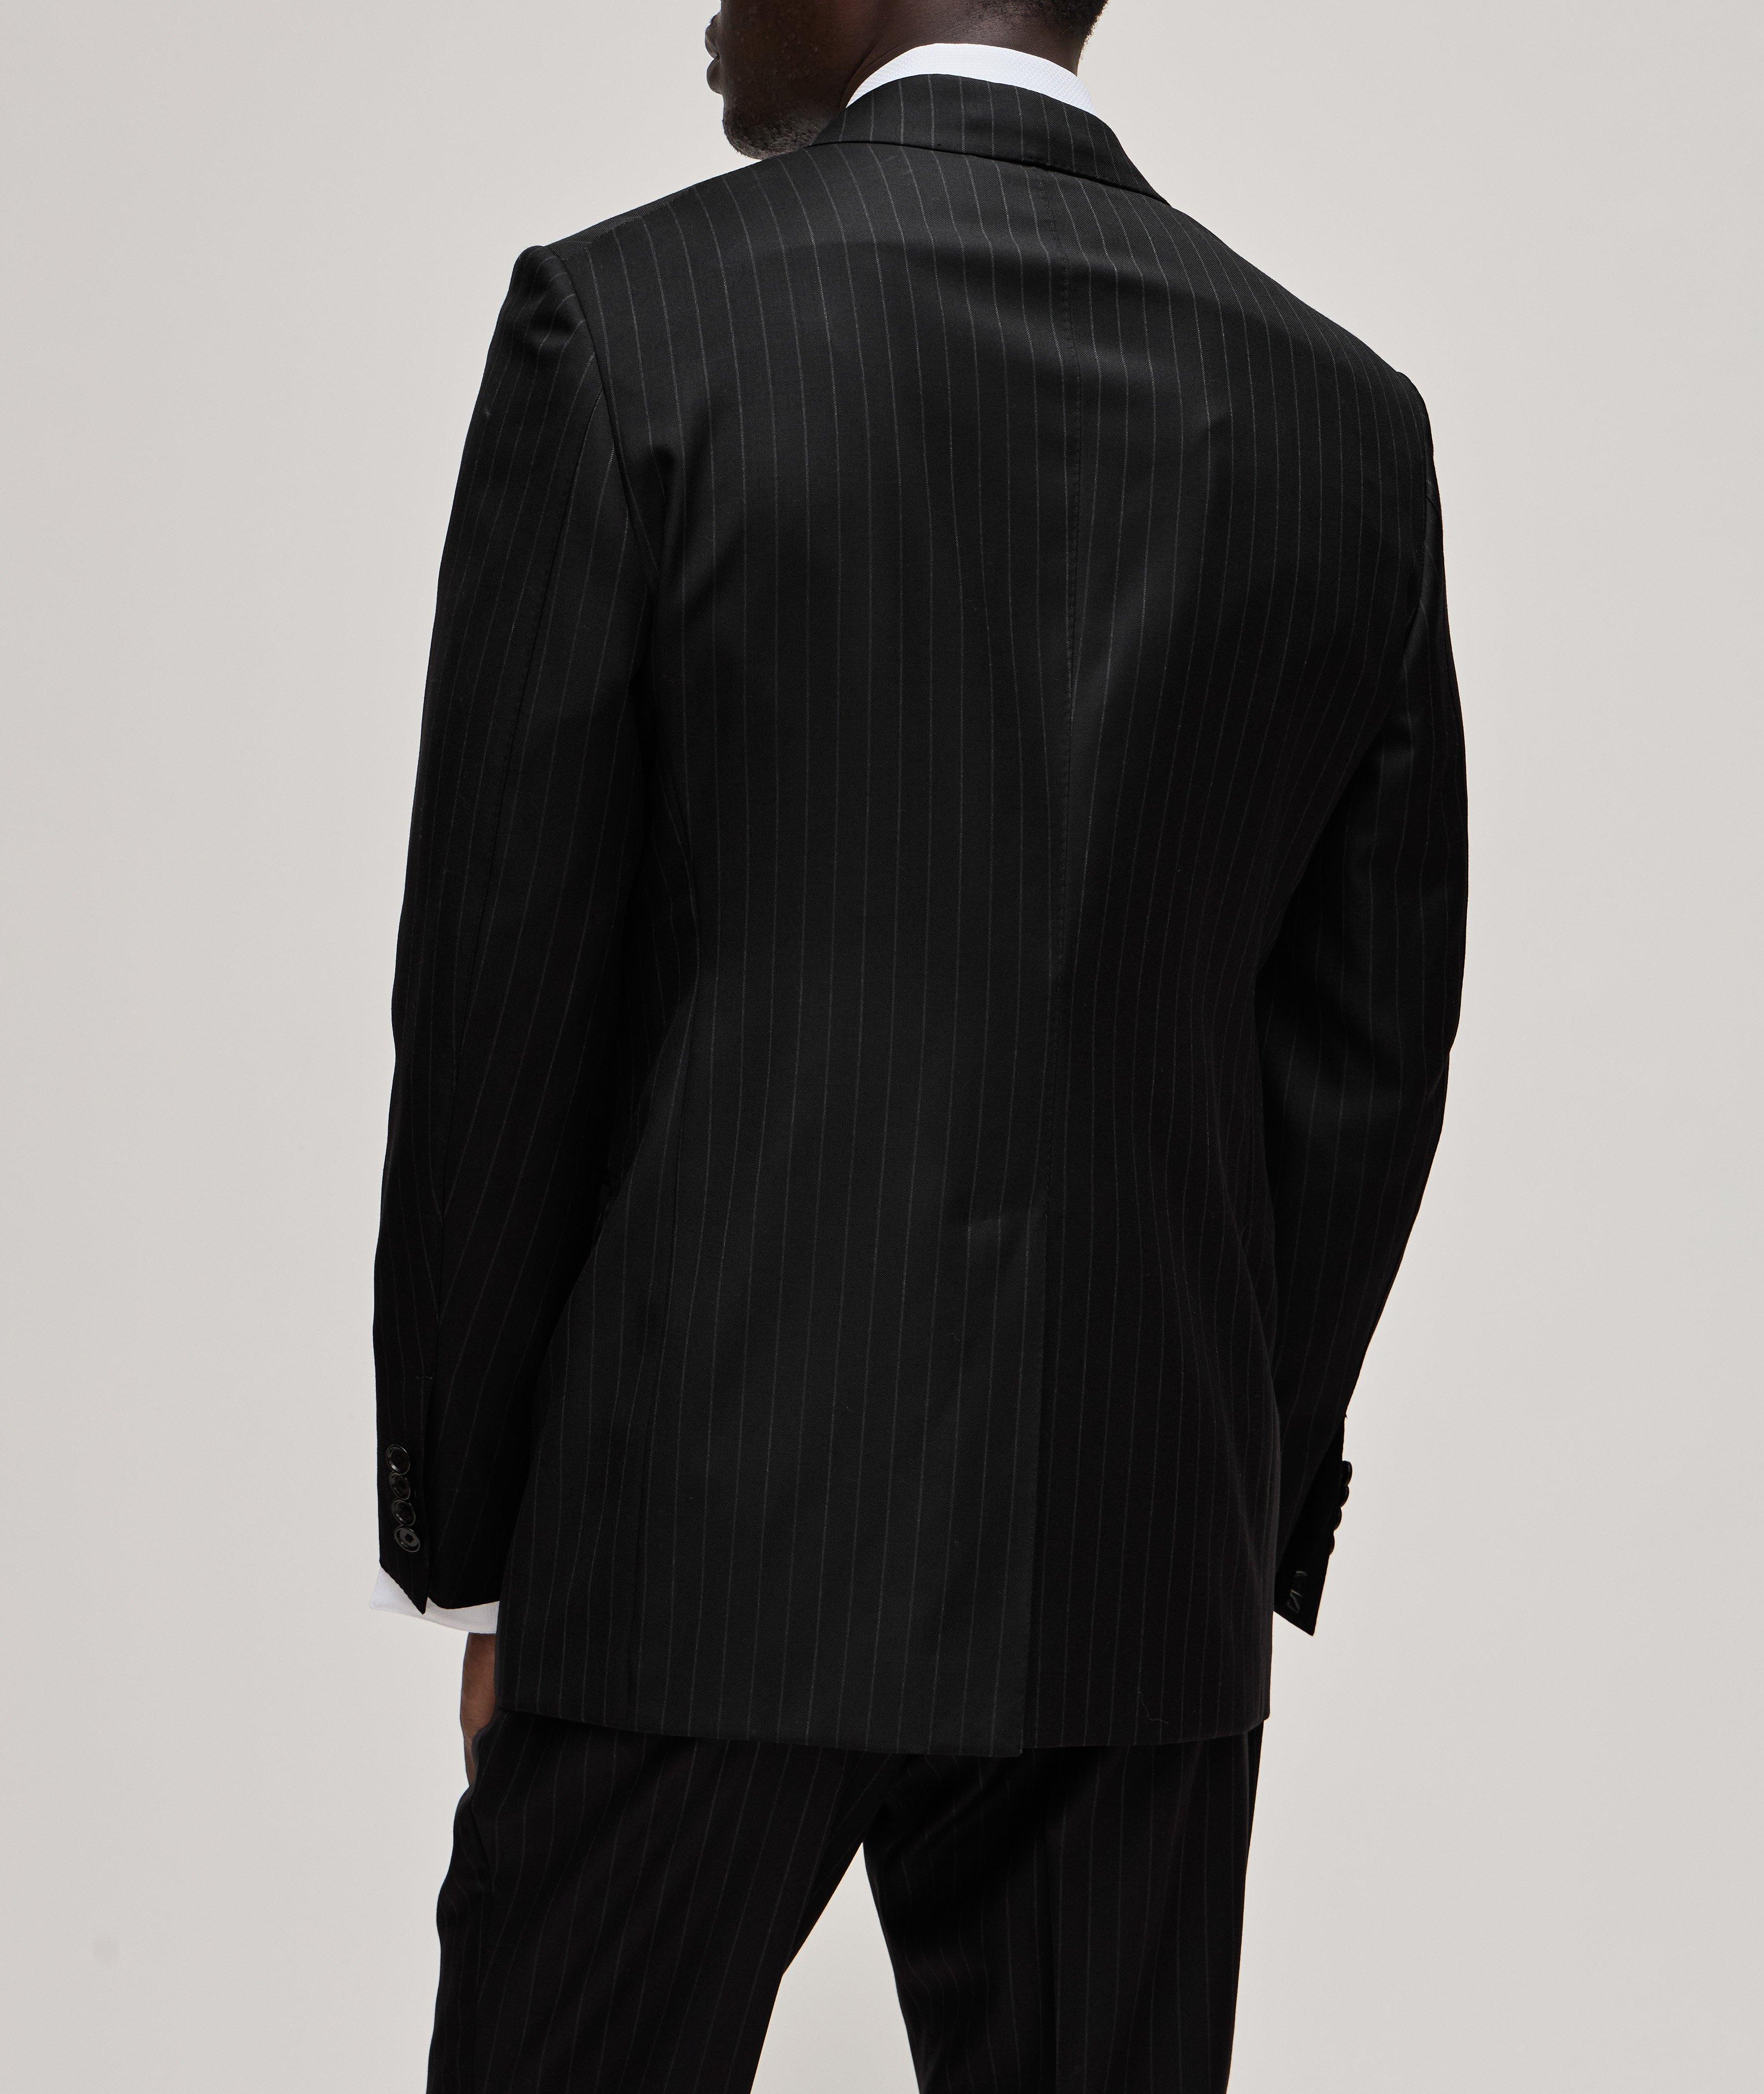 Shelton Chalk Stripe Wool Suit image 2